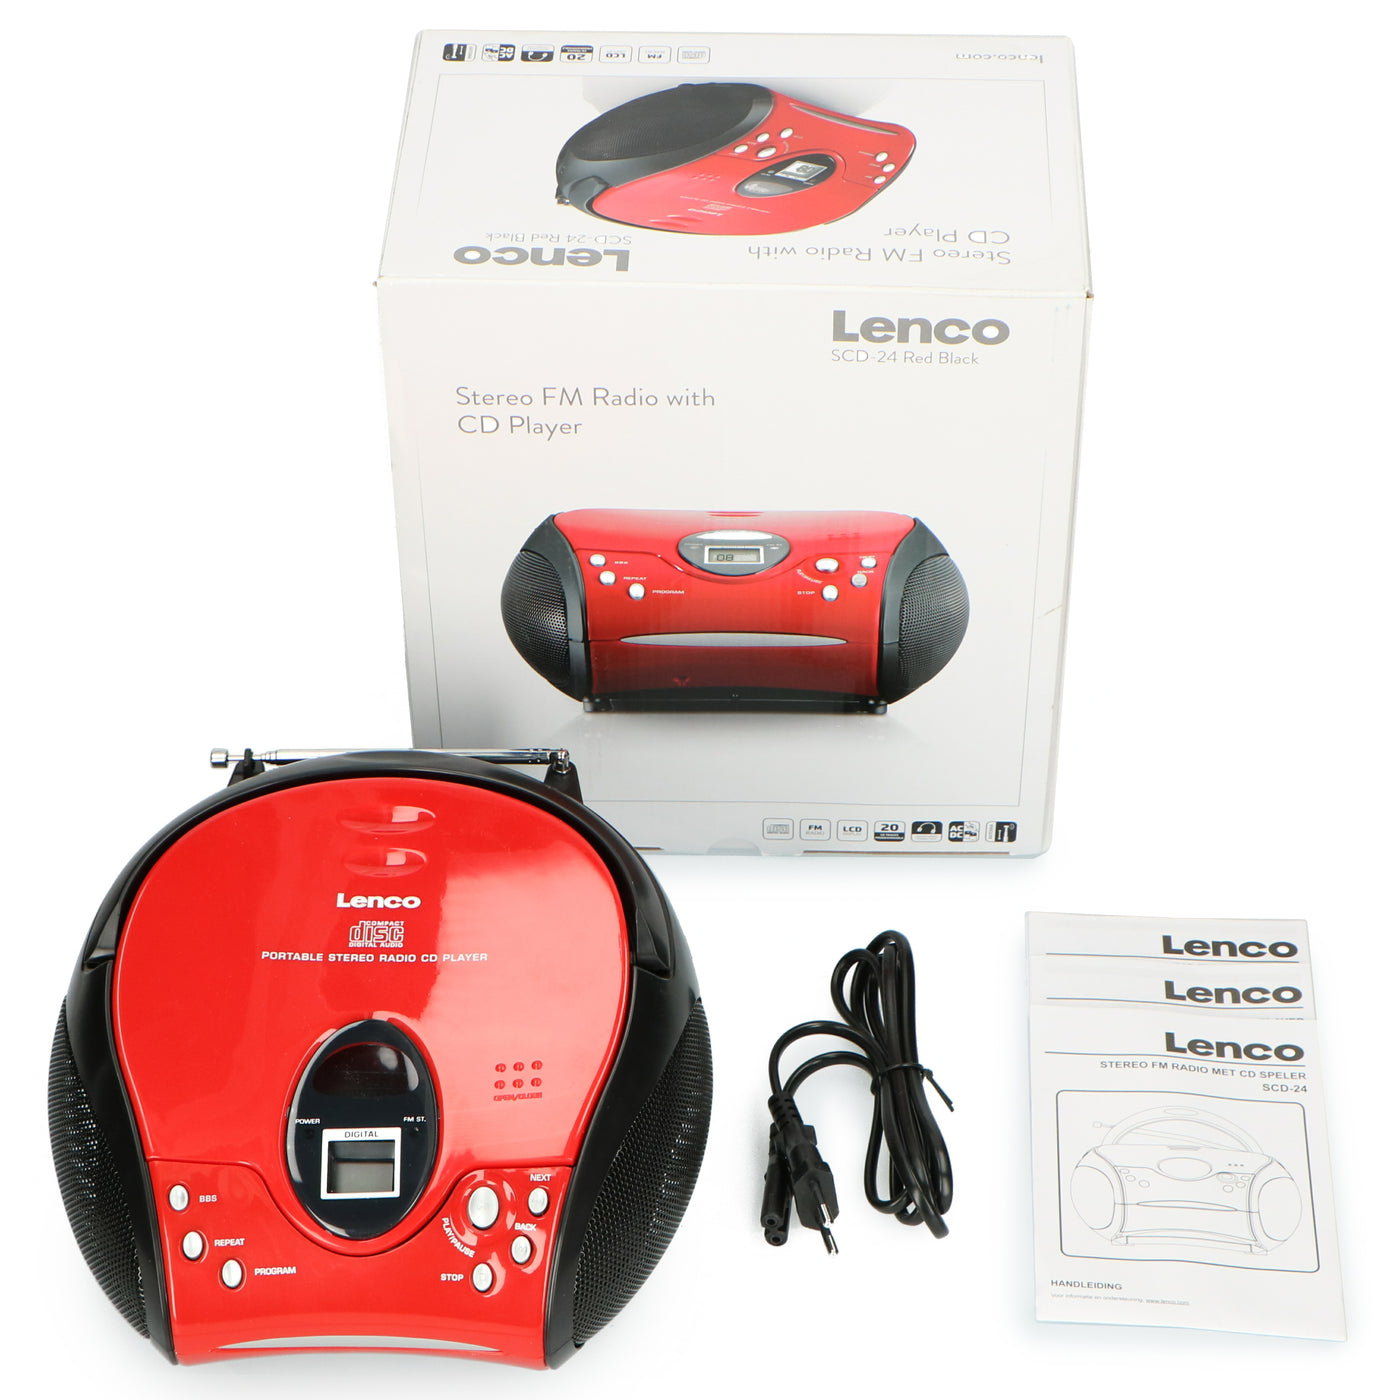 LENCO SCD-24 Red/Black stereo with FM CD Red player - – Lenco-Catalog radio - Portable